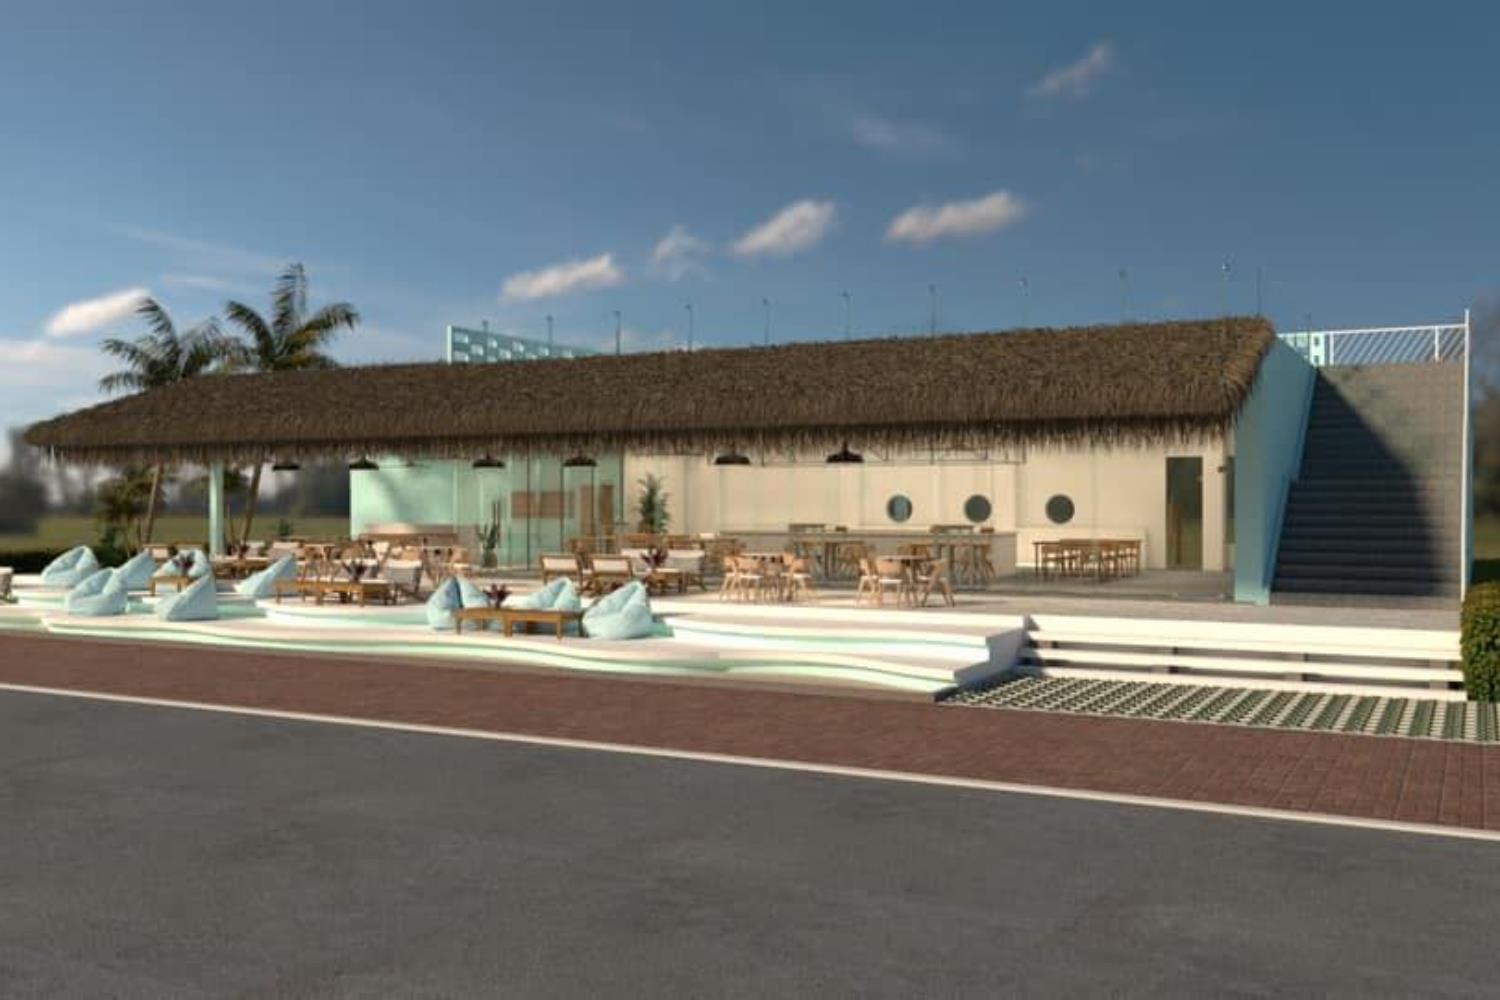 Rico Beach Cafe and Restaurant